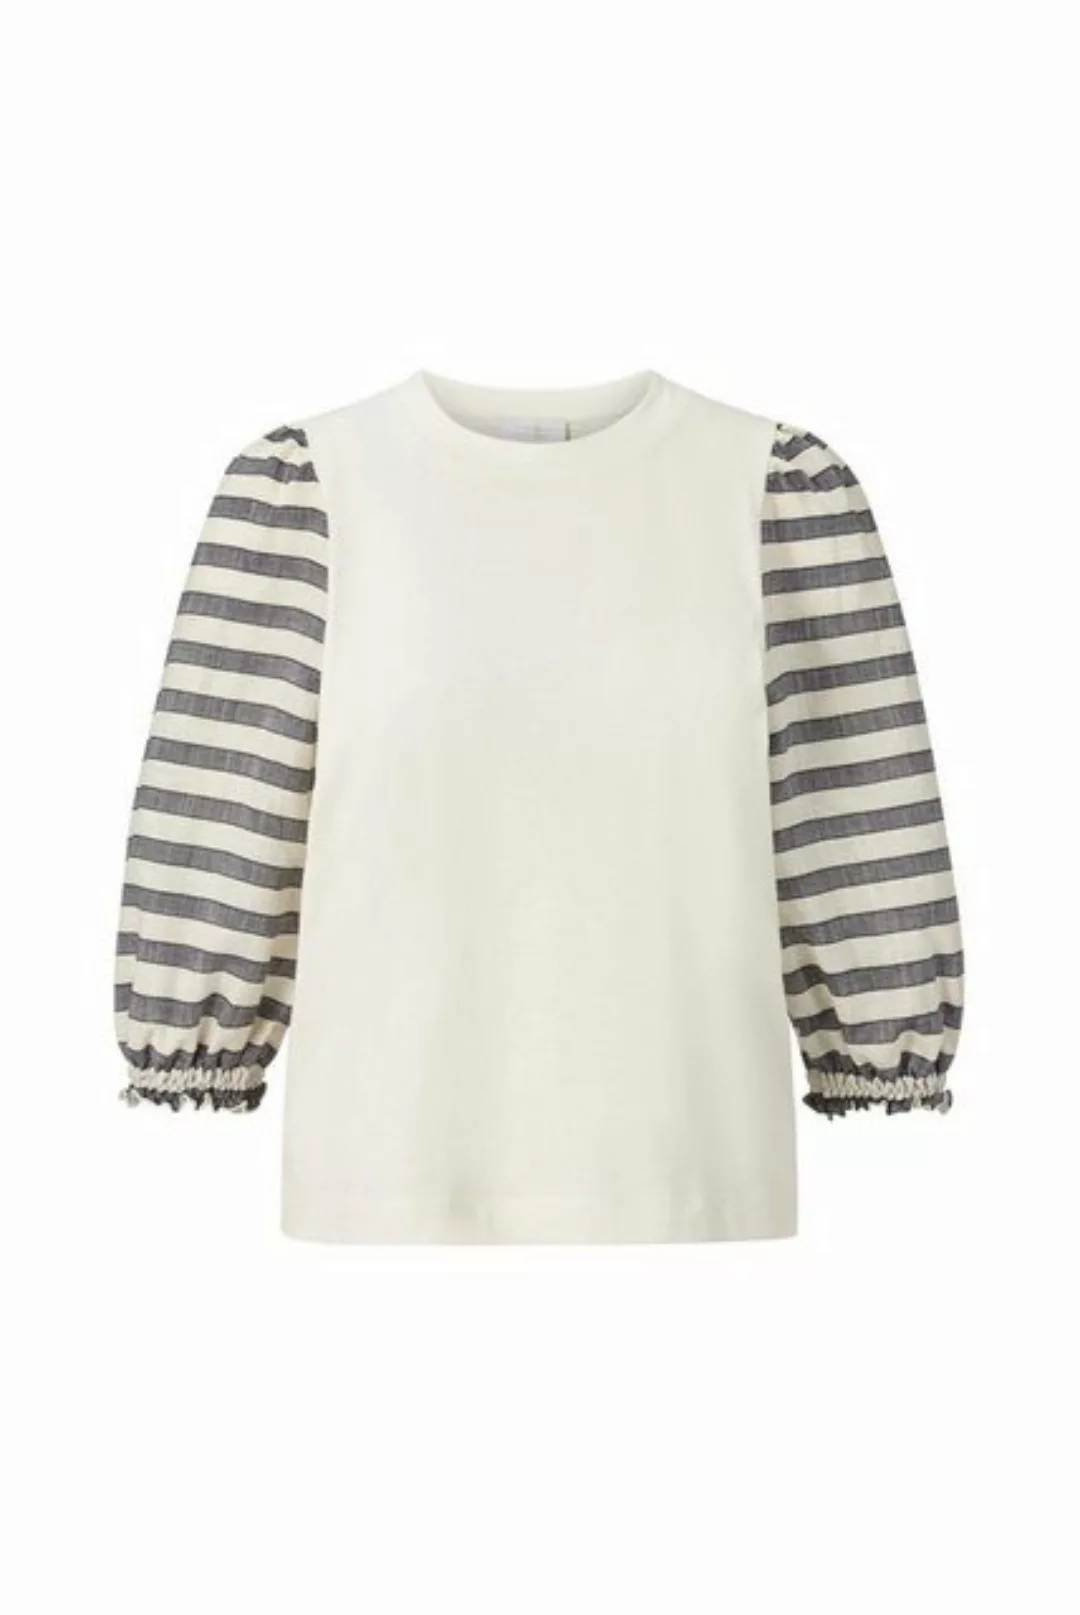 Rich & Royal Blusenshirt Mat mix blouse, whisper white günstig online kaufen